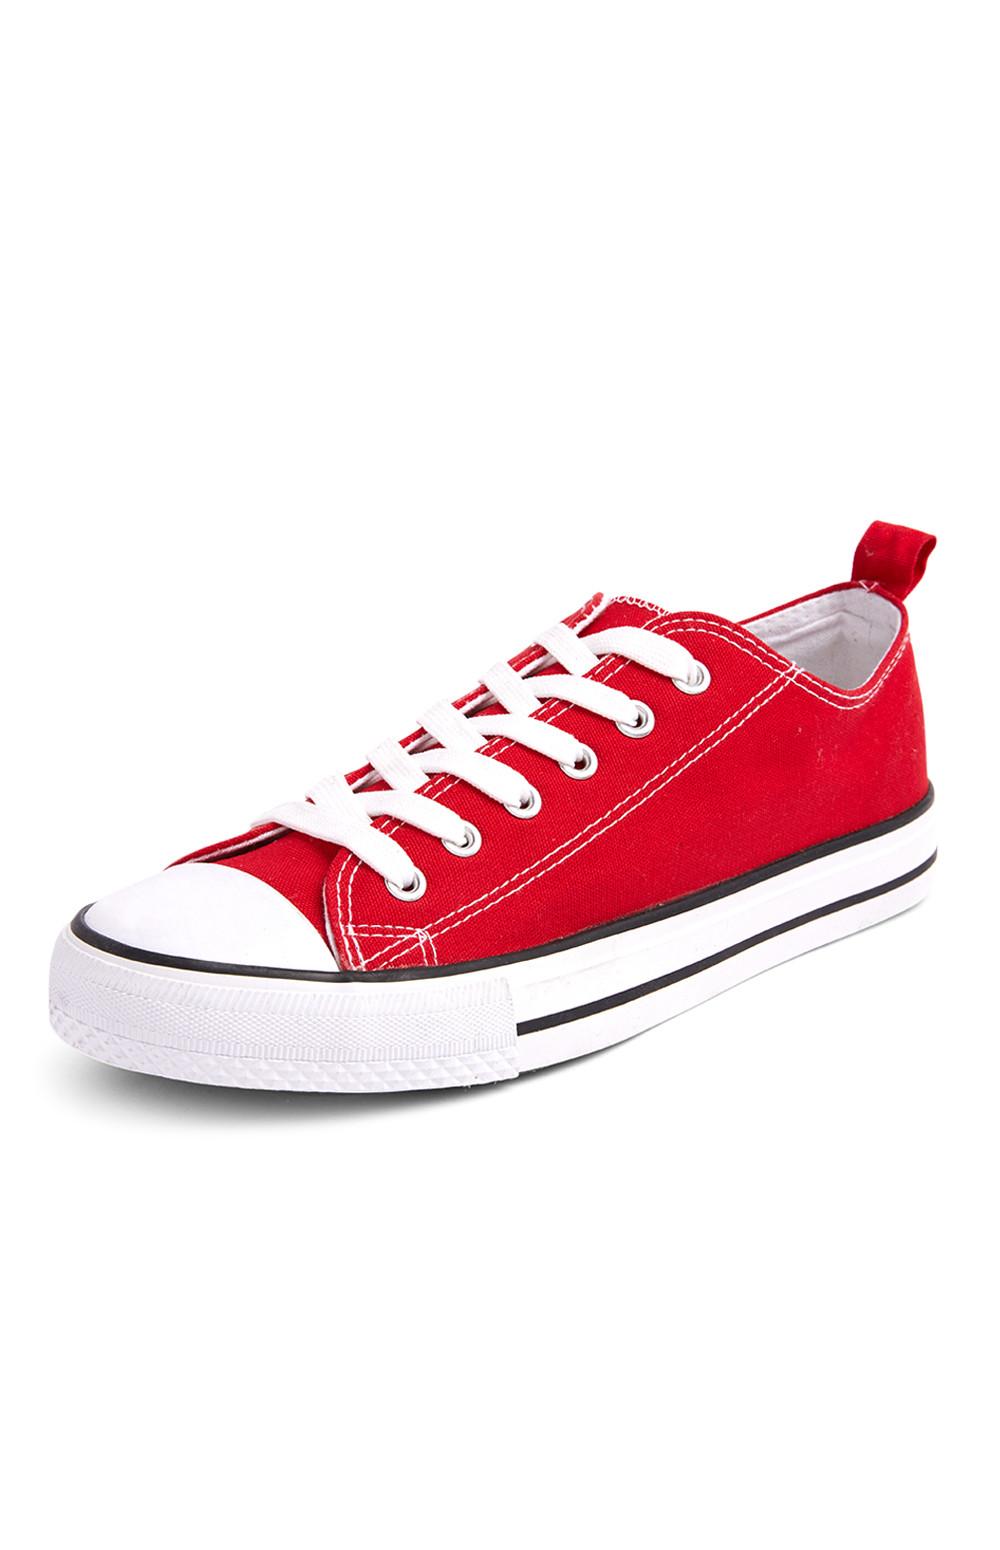 primark ladies red shoes